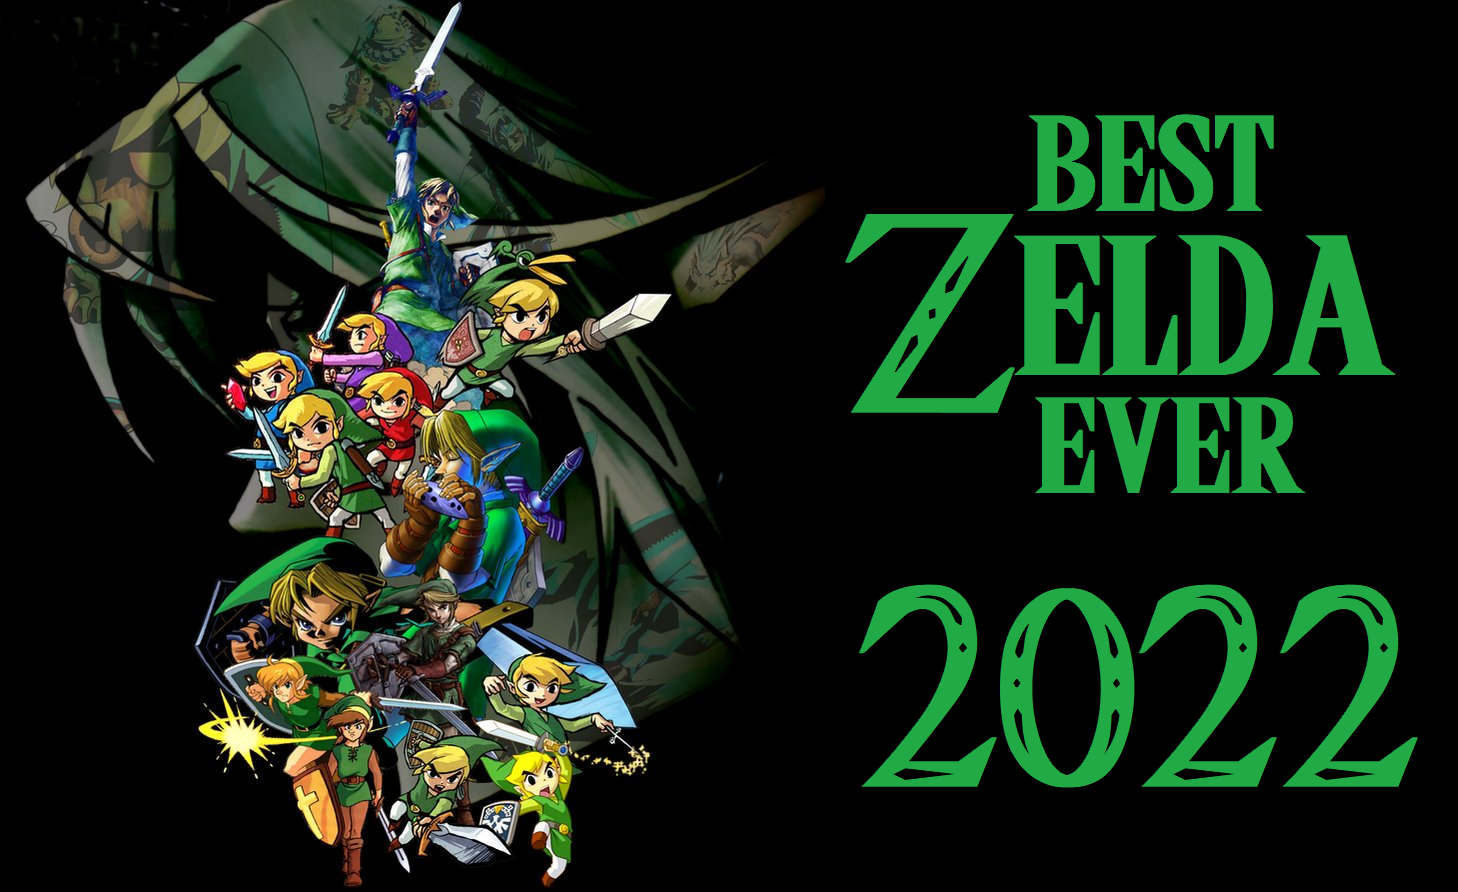 The Legend of Zelda: Breath of the Wild' gets fan-made Halloween DLC